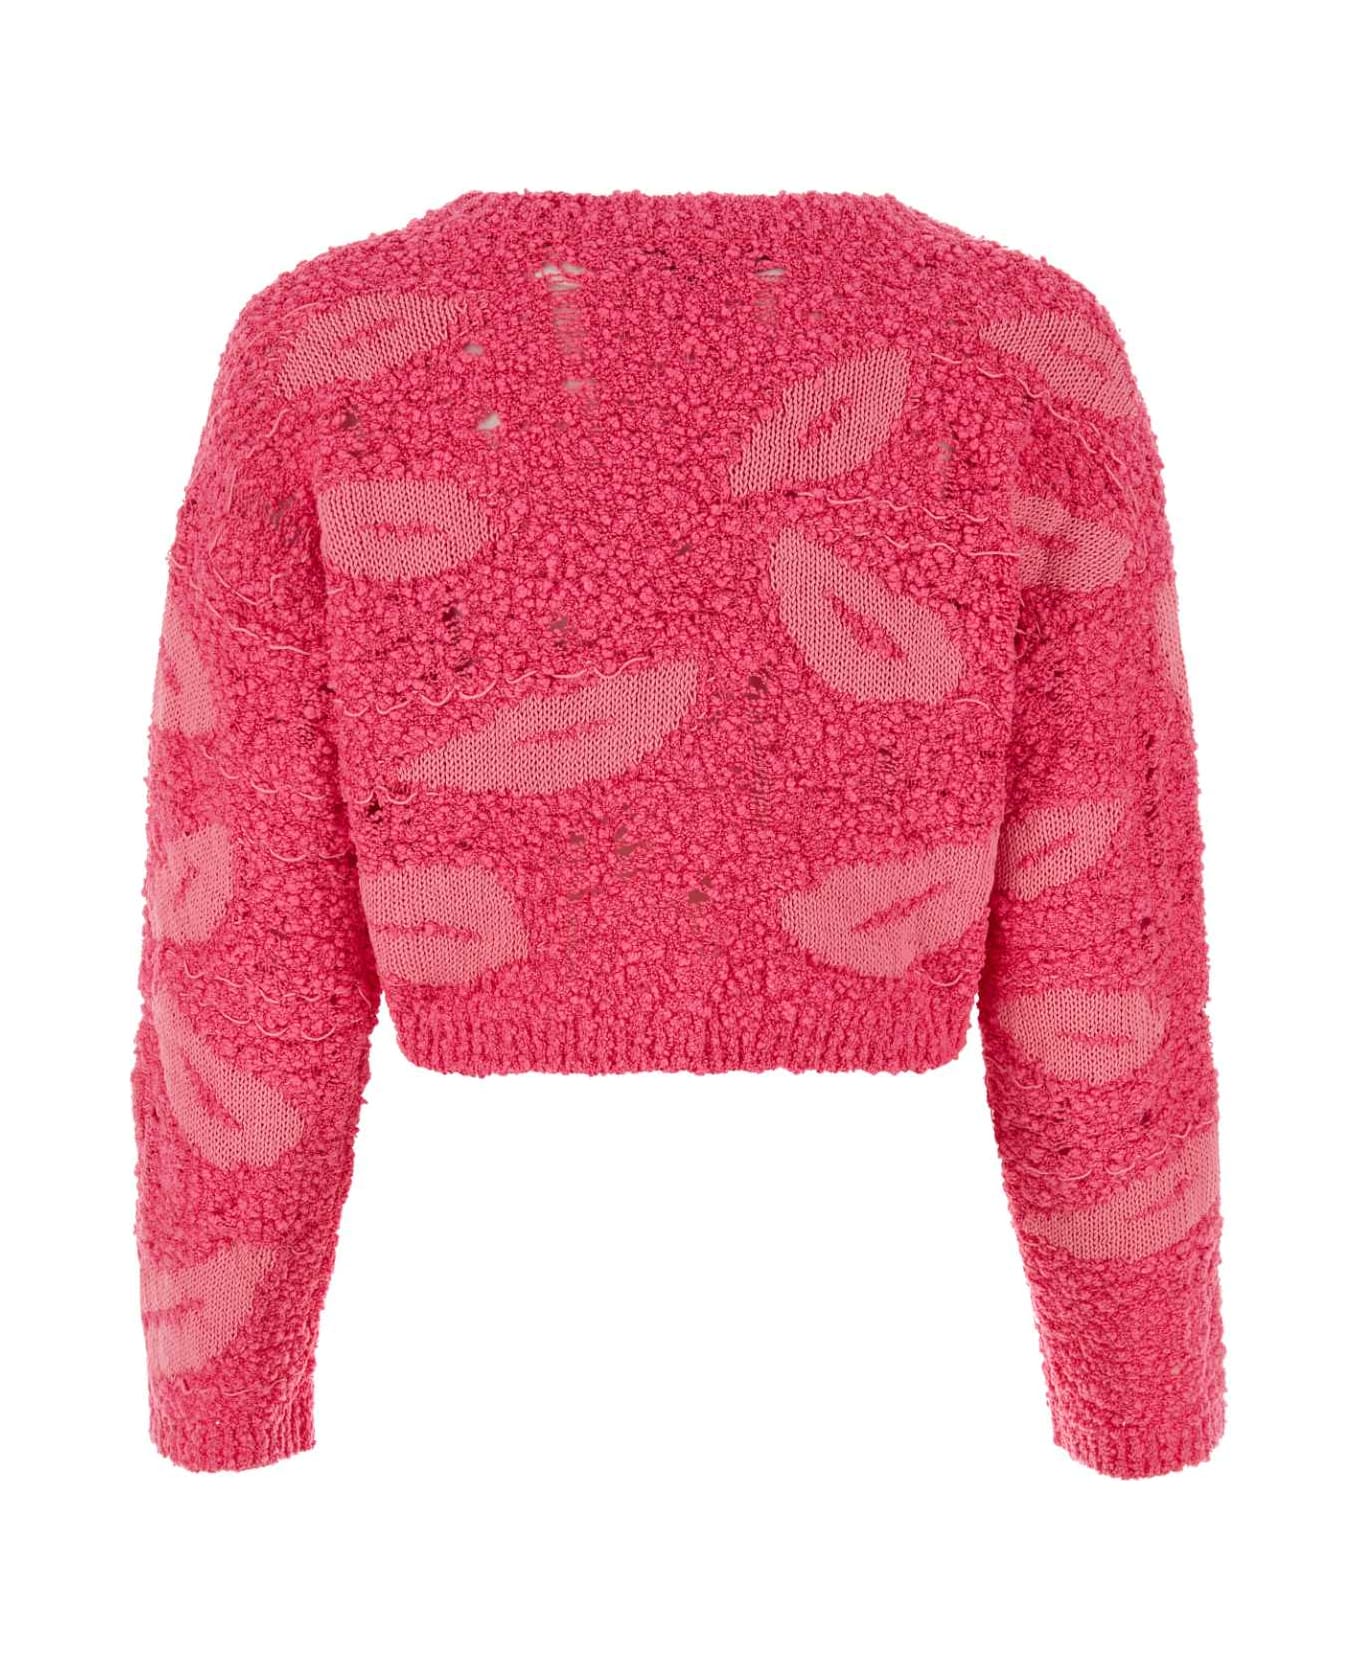 Marco Rambaldi Embroidered Cotton Blend Sweater - FUCSIA